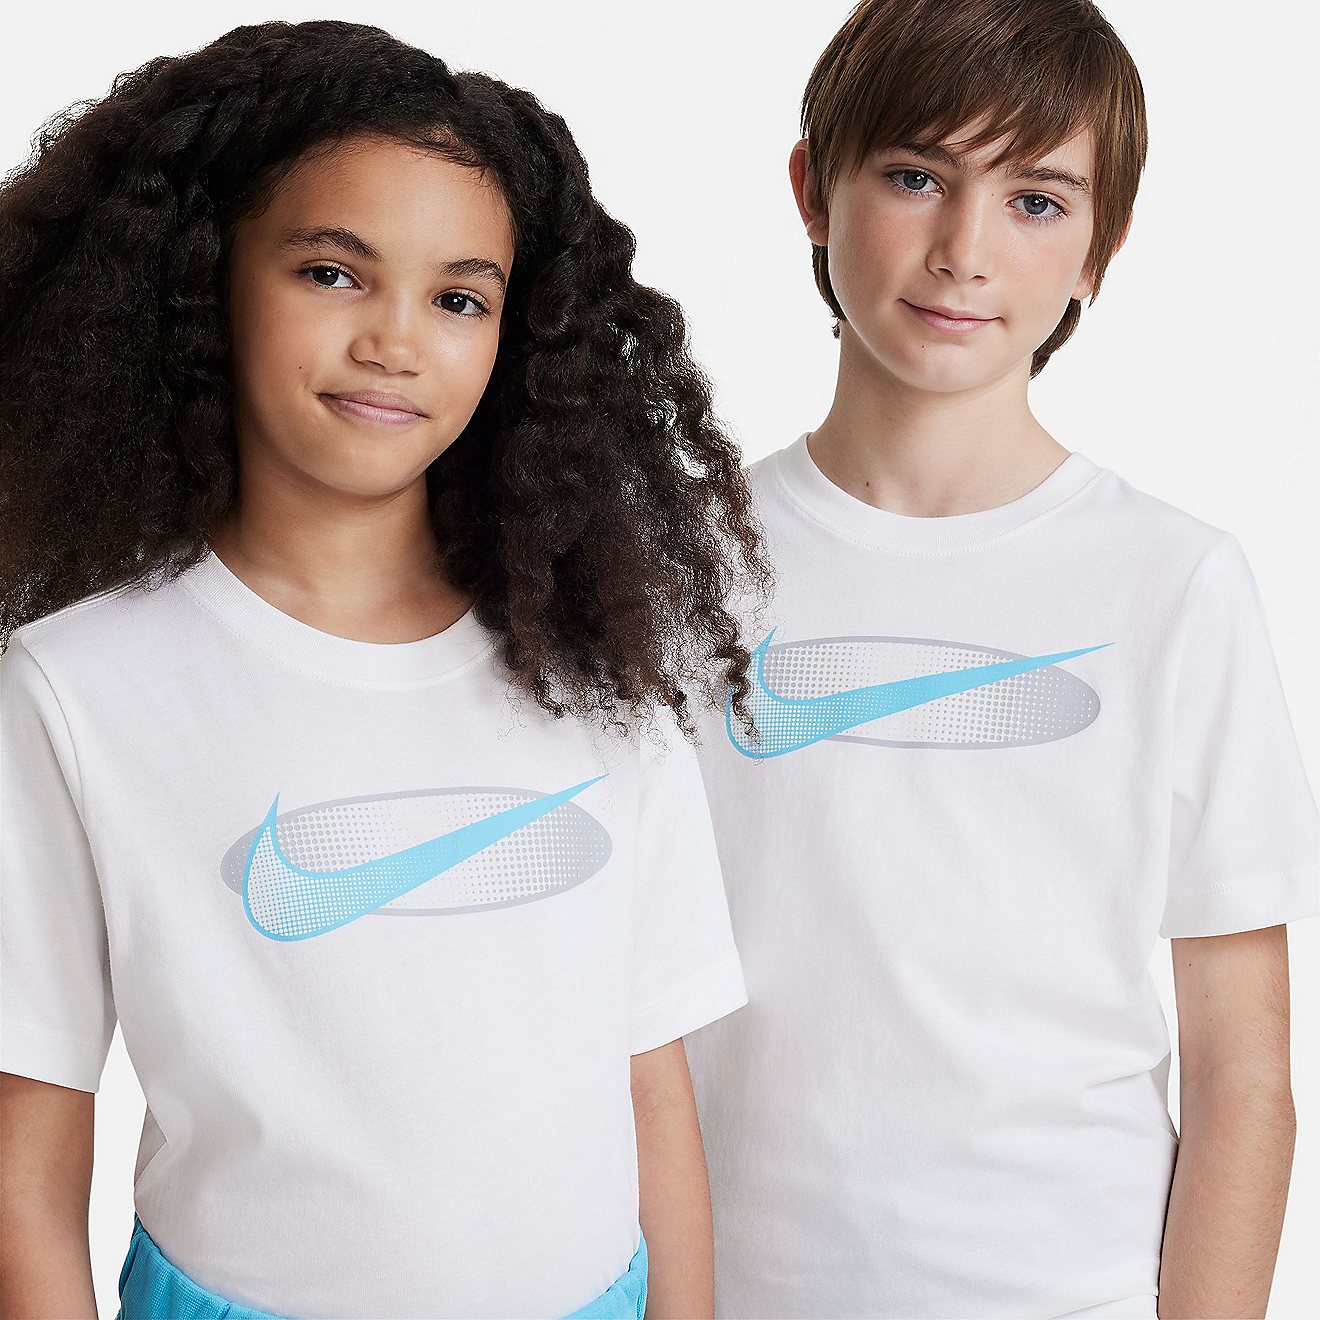 Nike Boys\' Sportswear Core Brandmark T-shirt | Academy